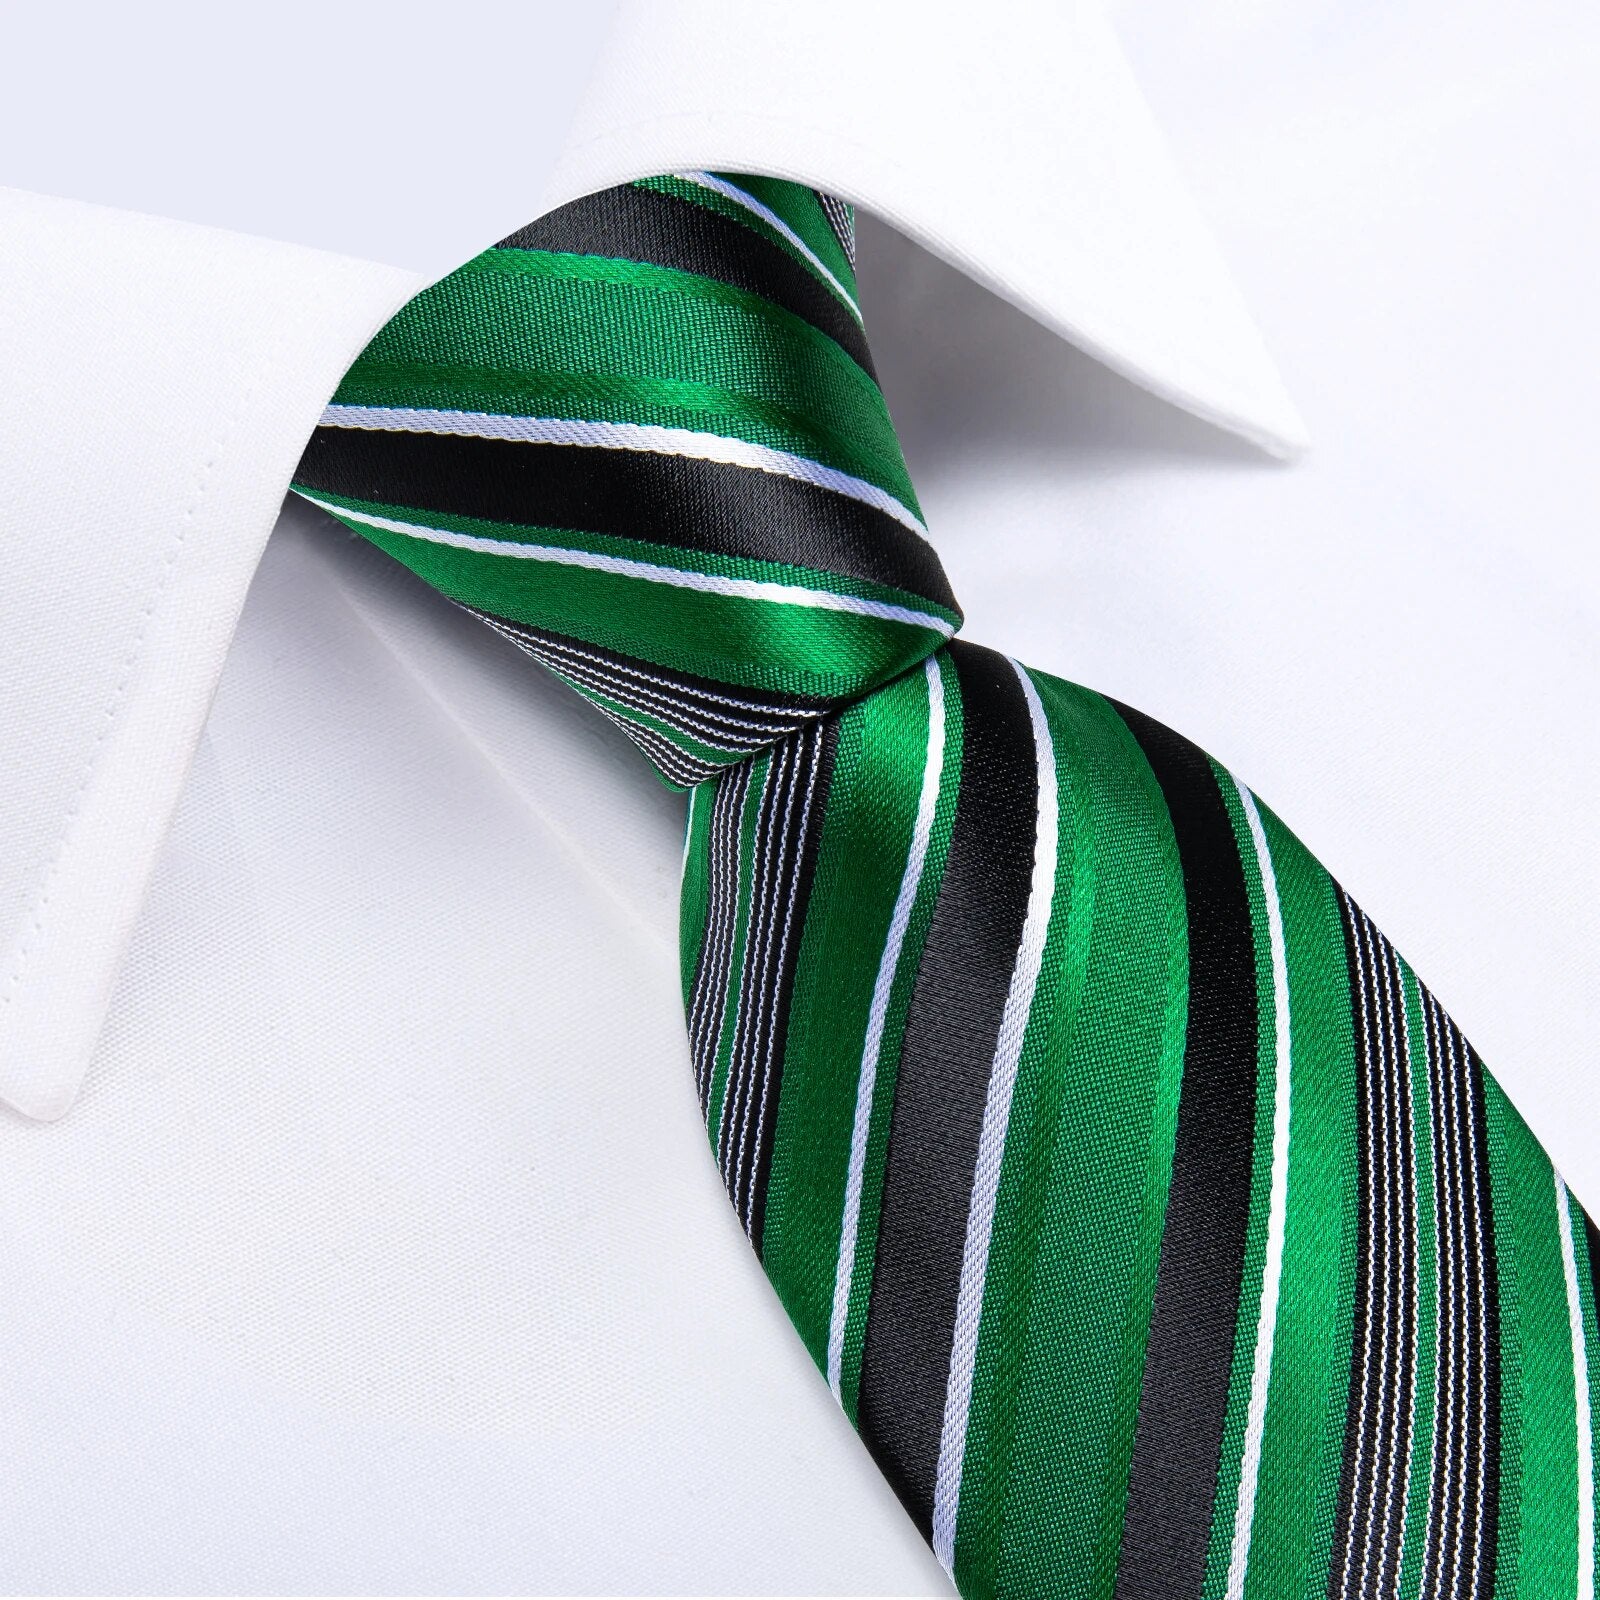 New Formal Ties Classic 100% Silk Green Striped Necktie Handkerchief Cufflinks Gift